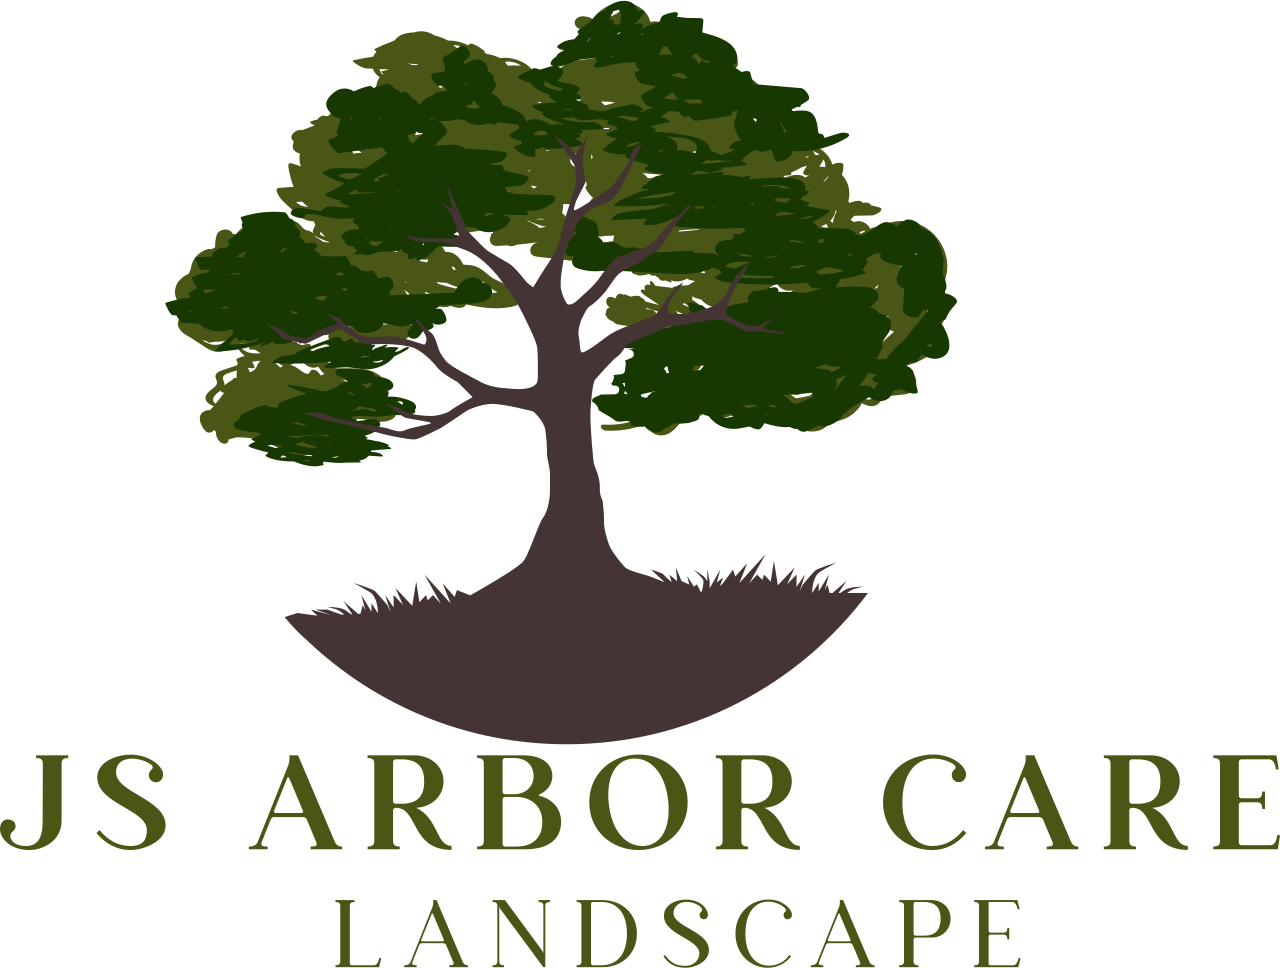 JS Arbor care's logo